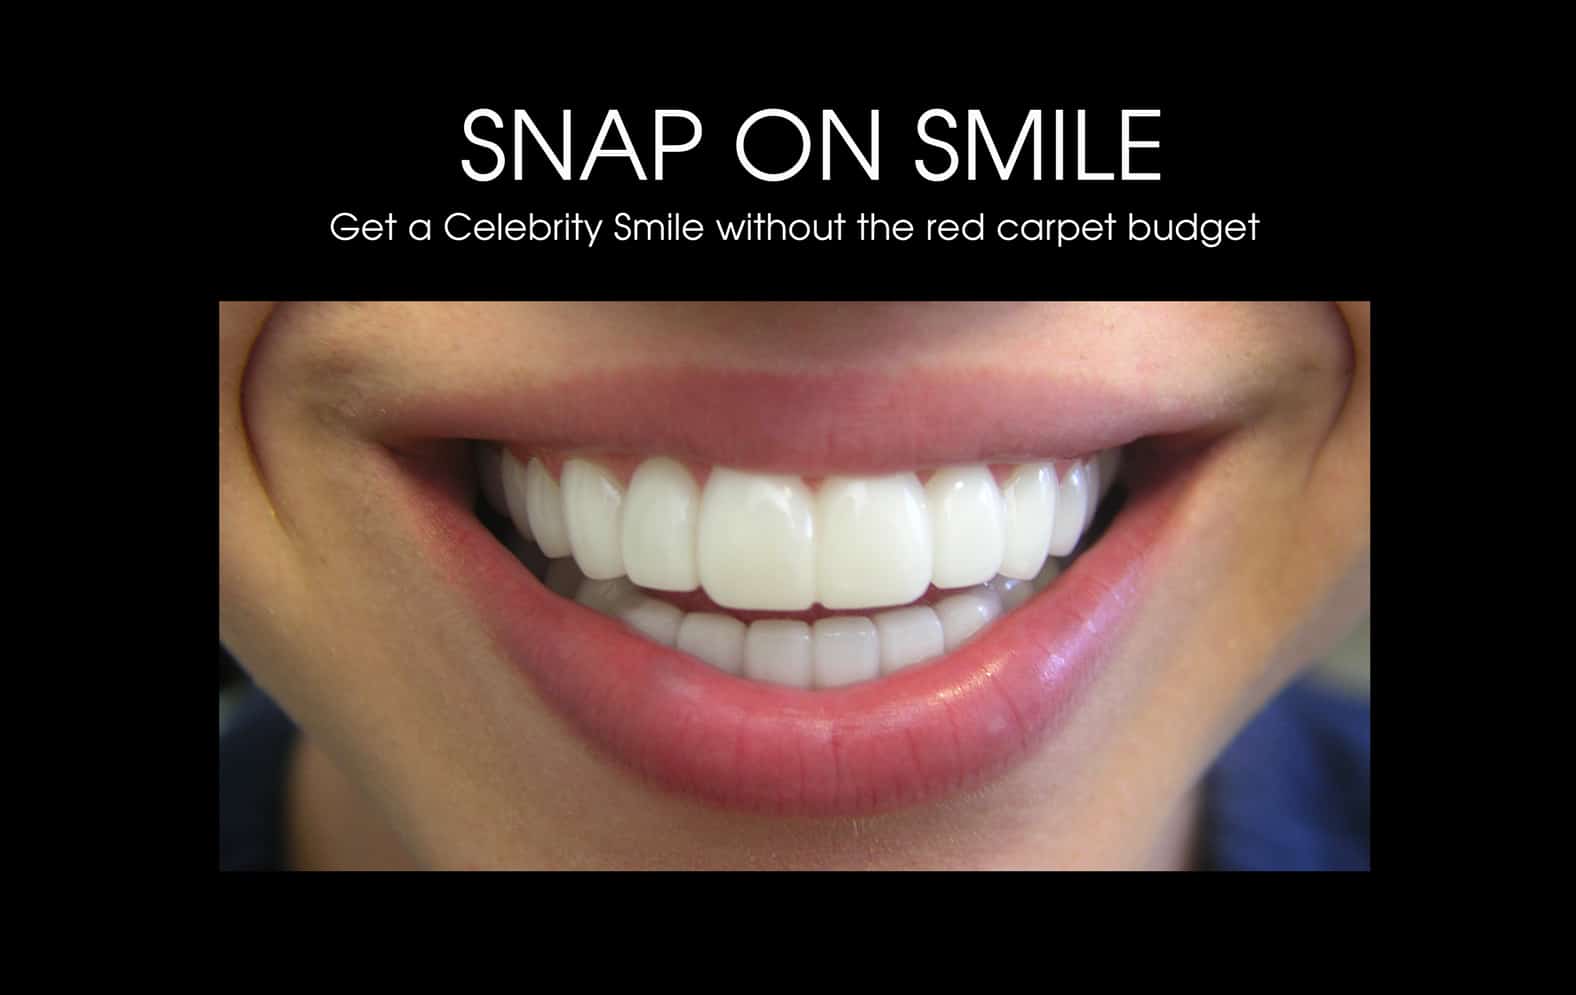 Snap on Smile Melbourne Australia | Affordable Cosmetic Dentistry Melbourne CBD